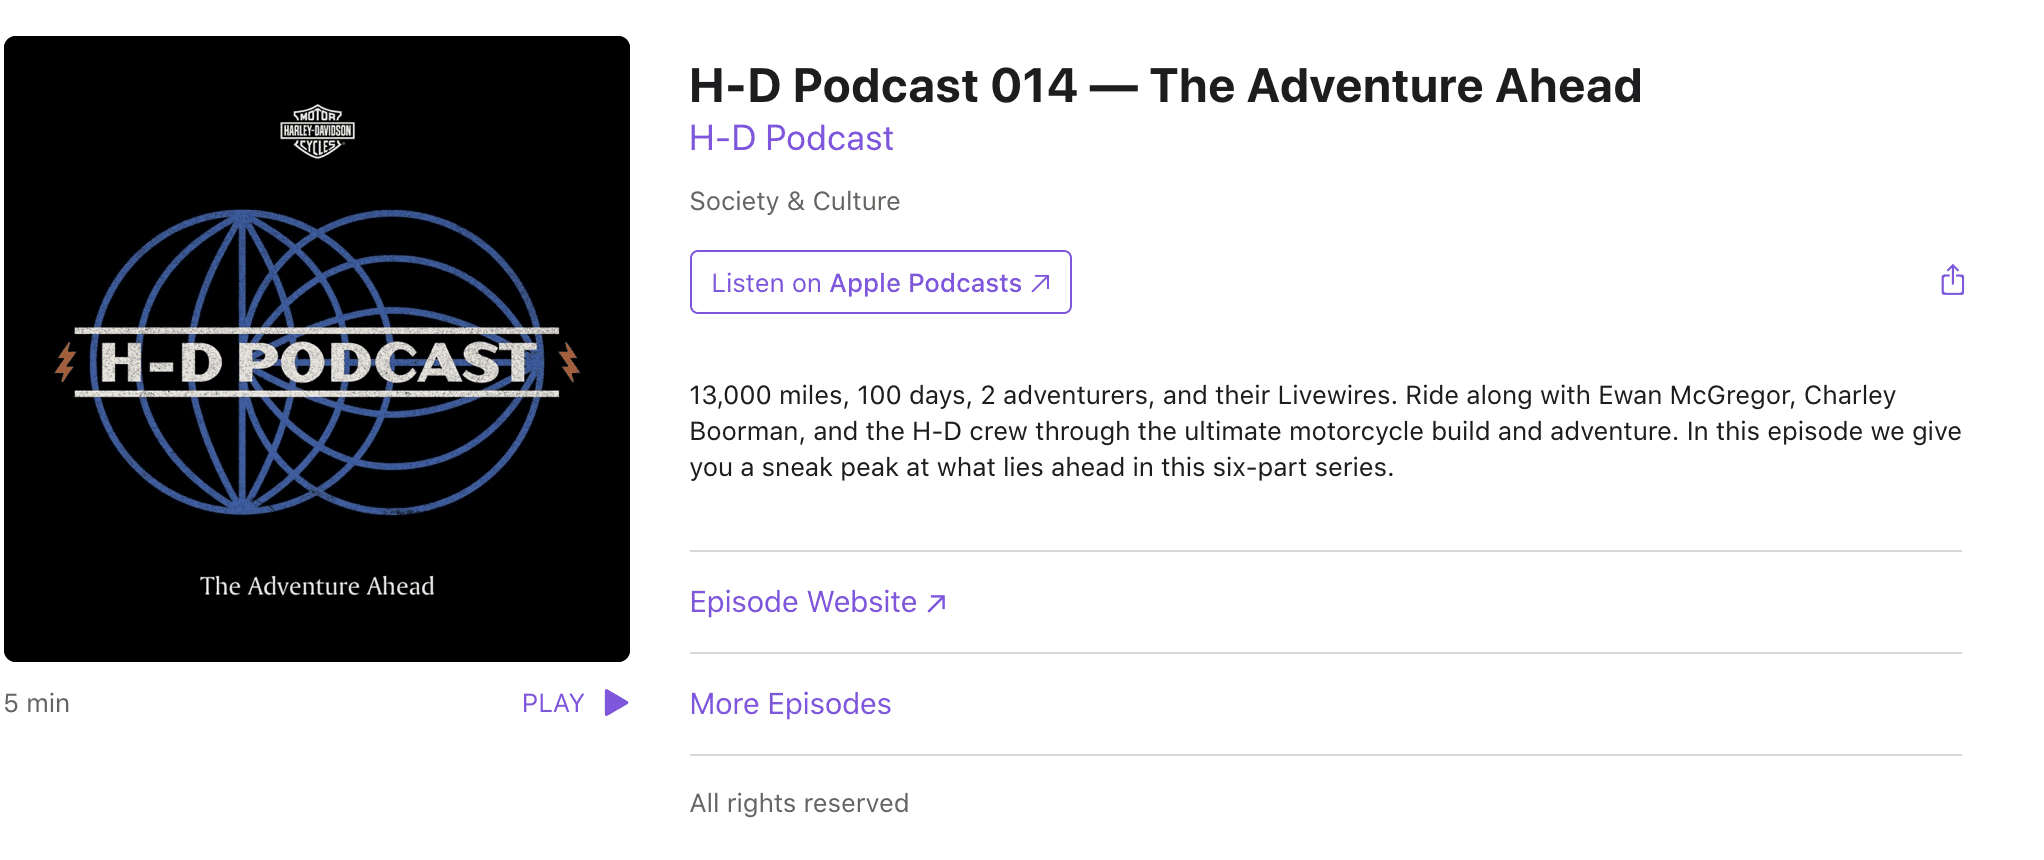 H-D Podcast